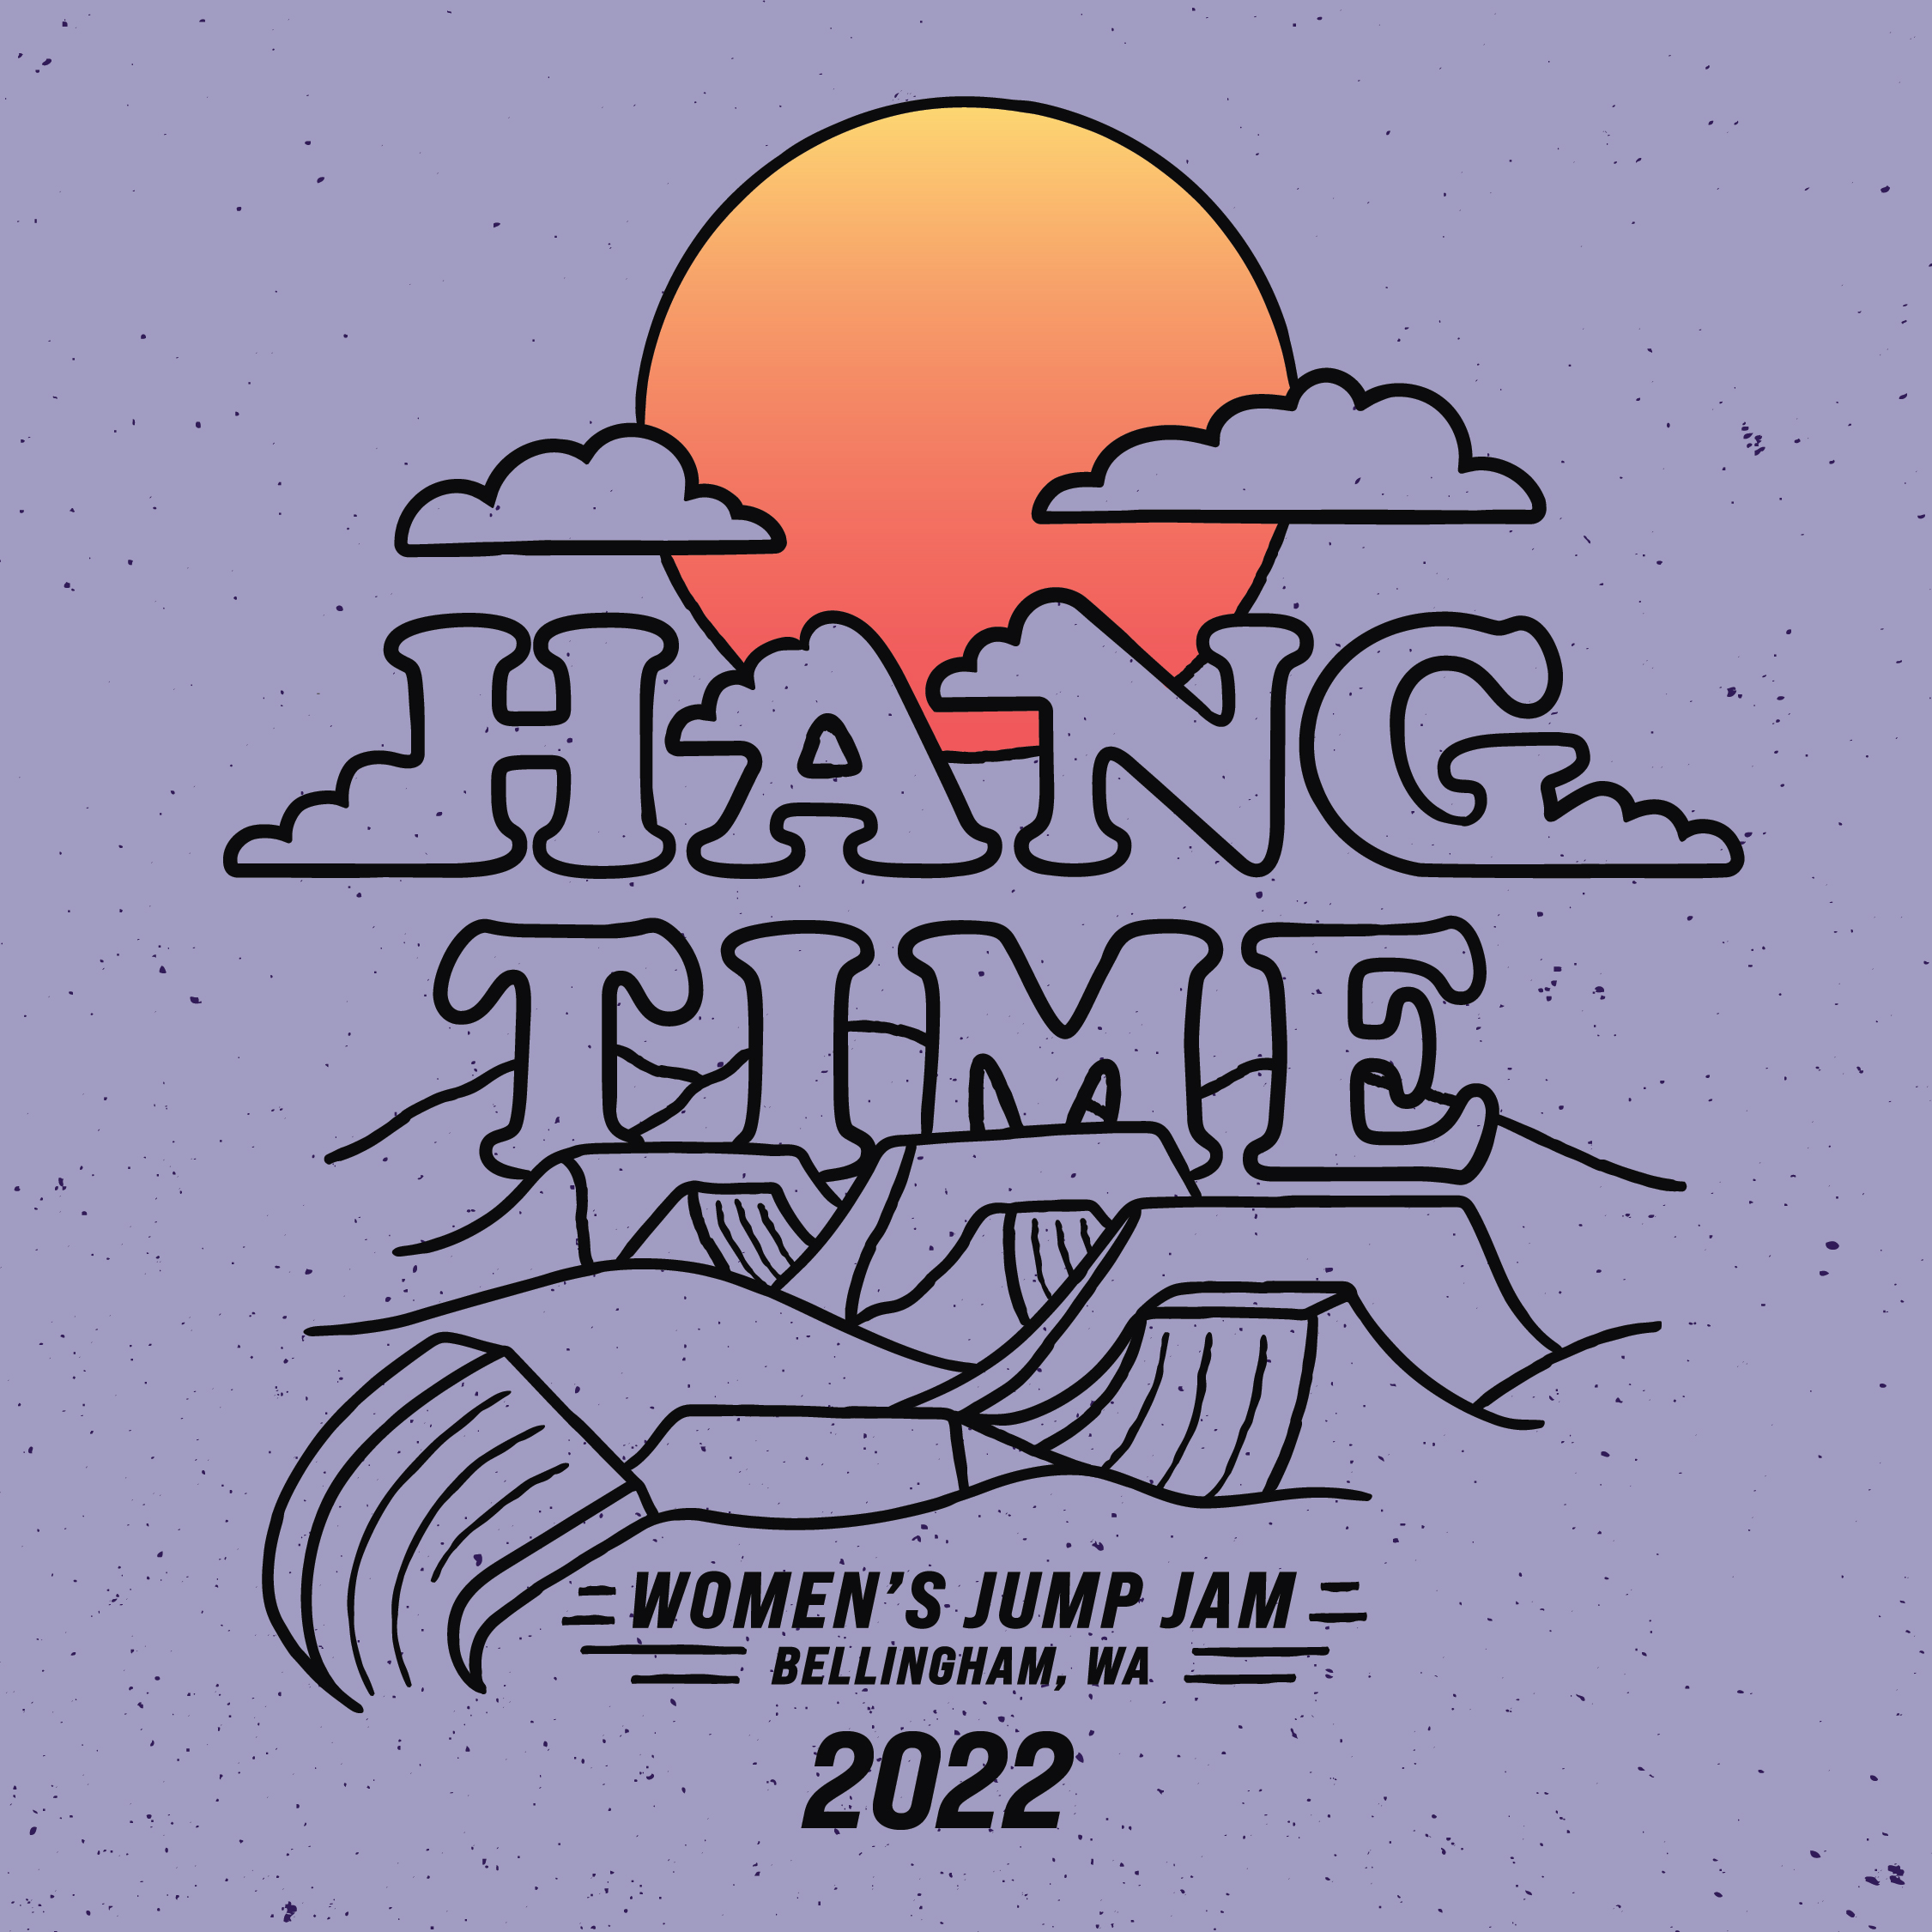 Hangtime Returns for 2022!